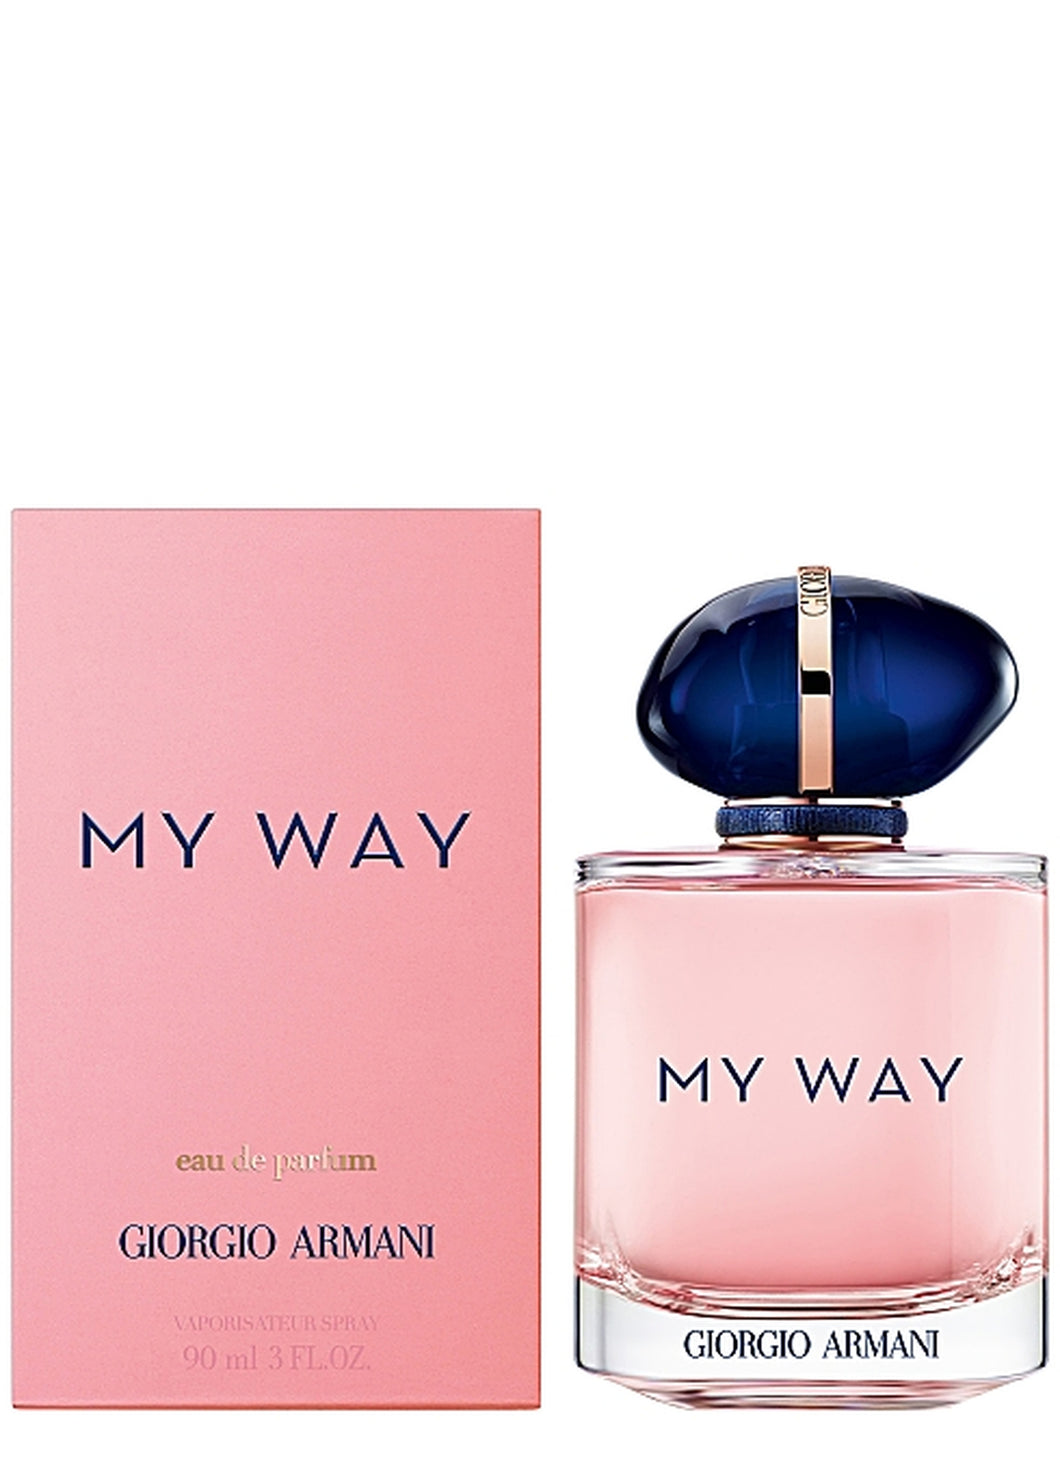 Giorgio Armani My Way 3 oz / 90 ml Eau de Parfum EDP Spray by Giorgio Armani for women